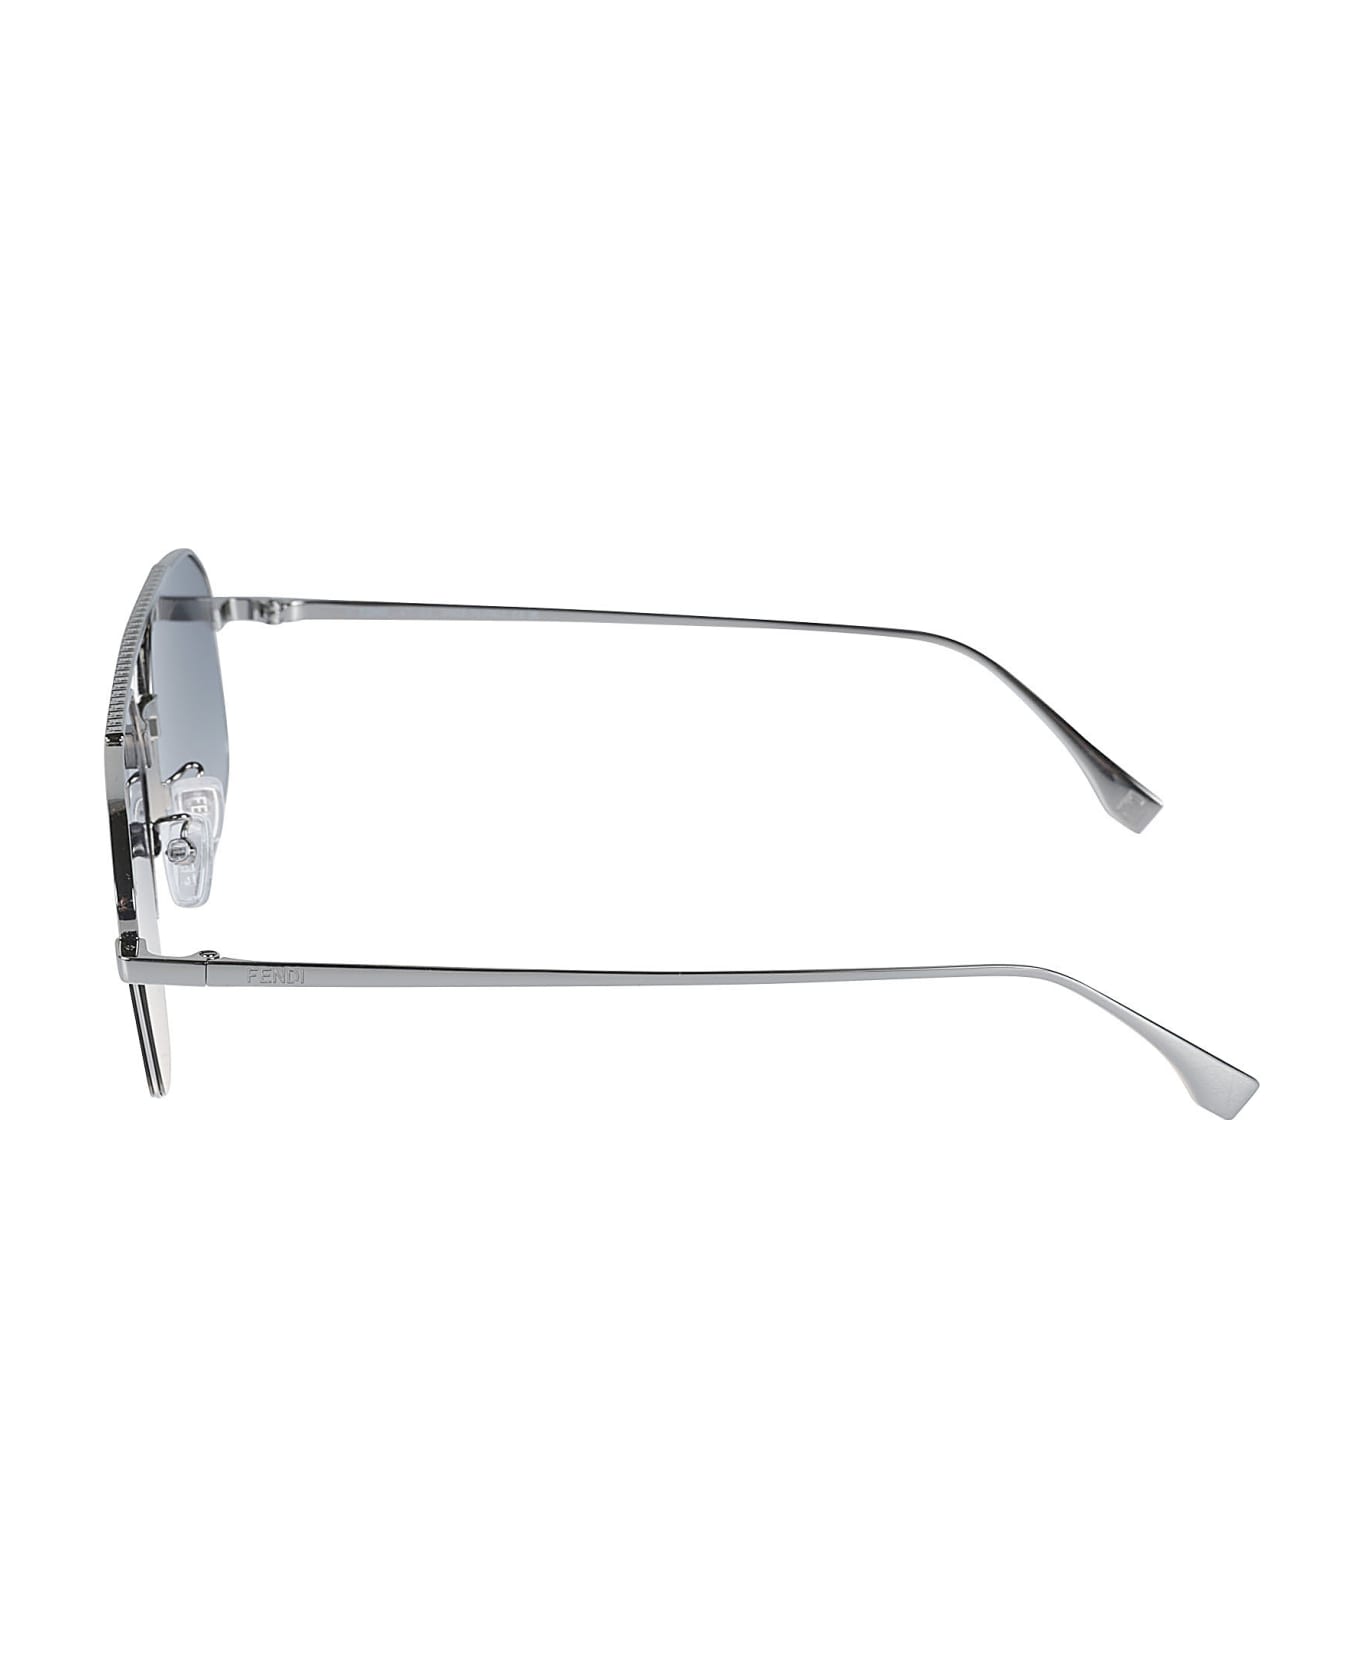 Fendi Eyewear Aviator Sunglasses - 14b